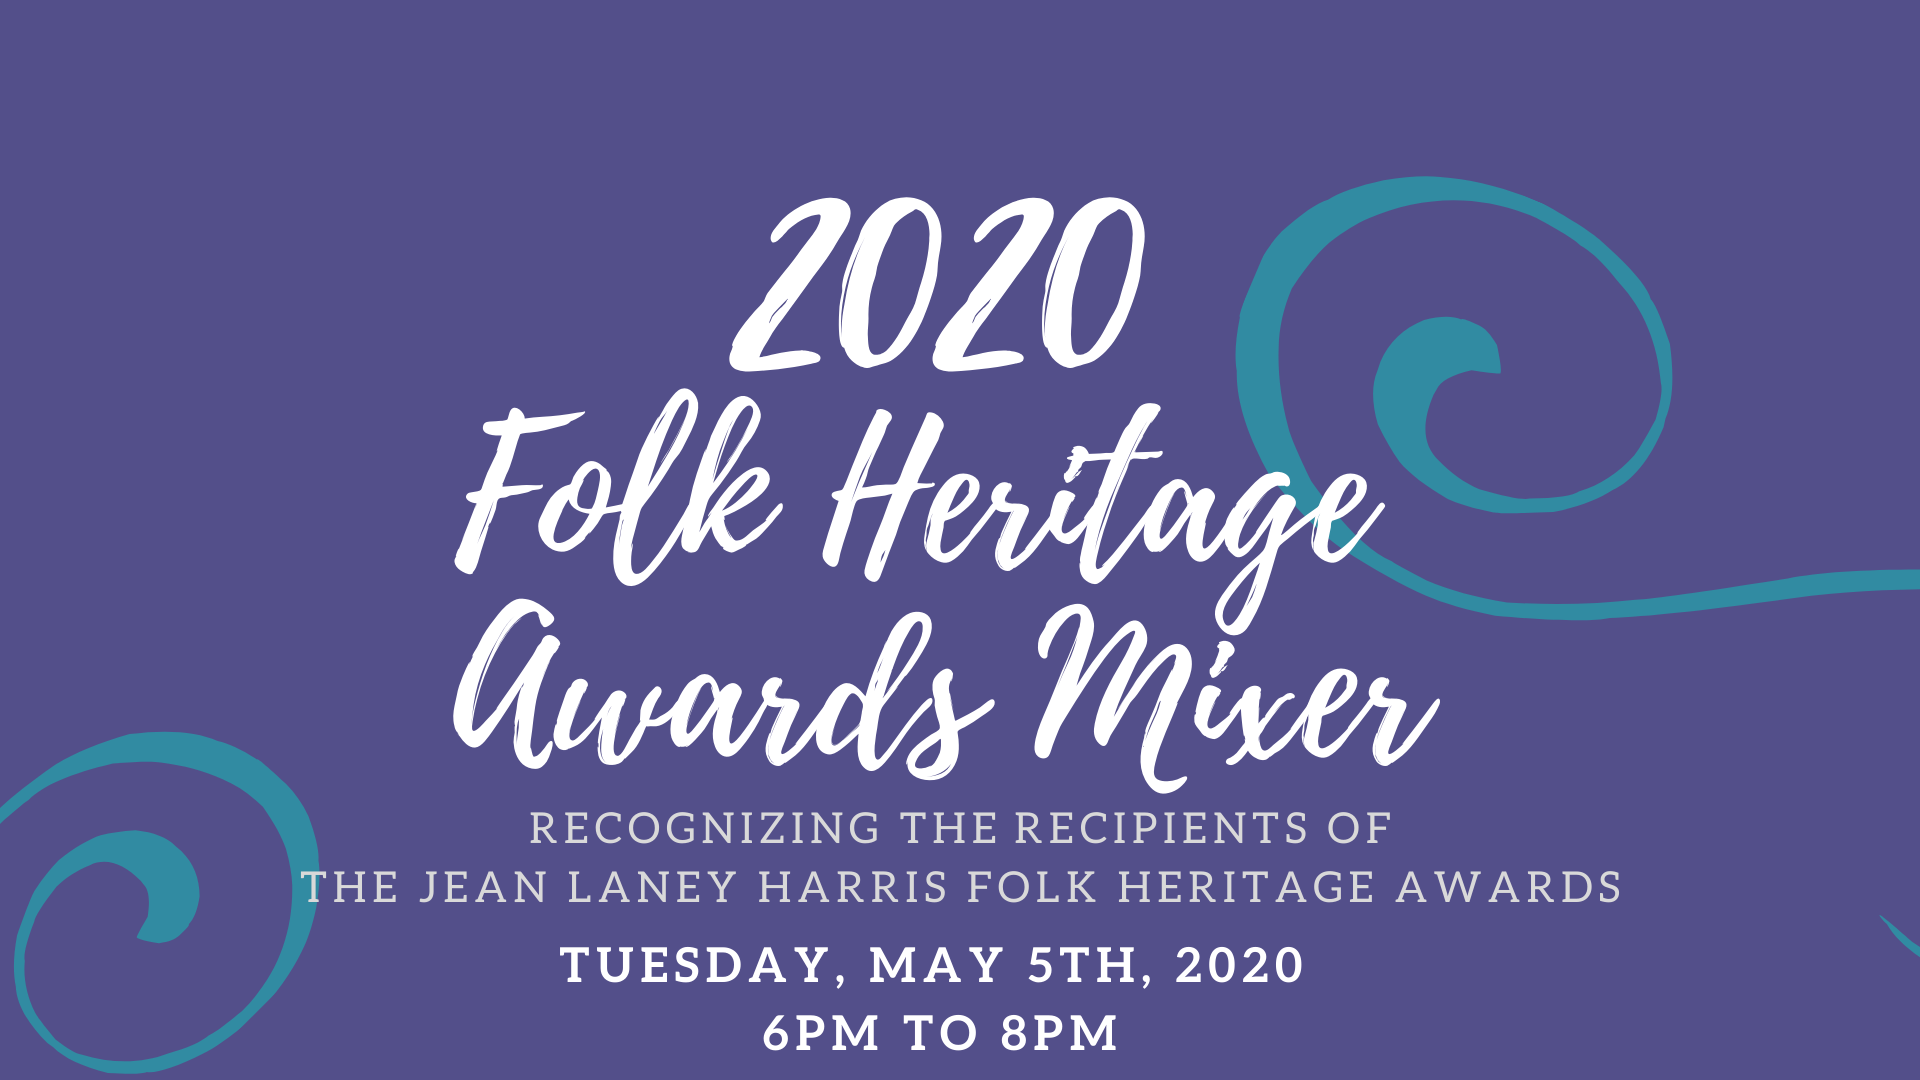 POSTPONED: 2020 Folk Heritage Awards Mixer